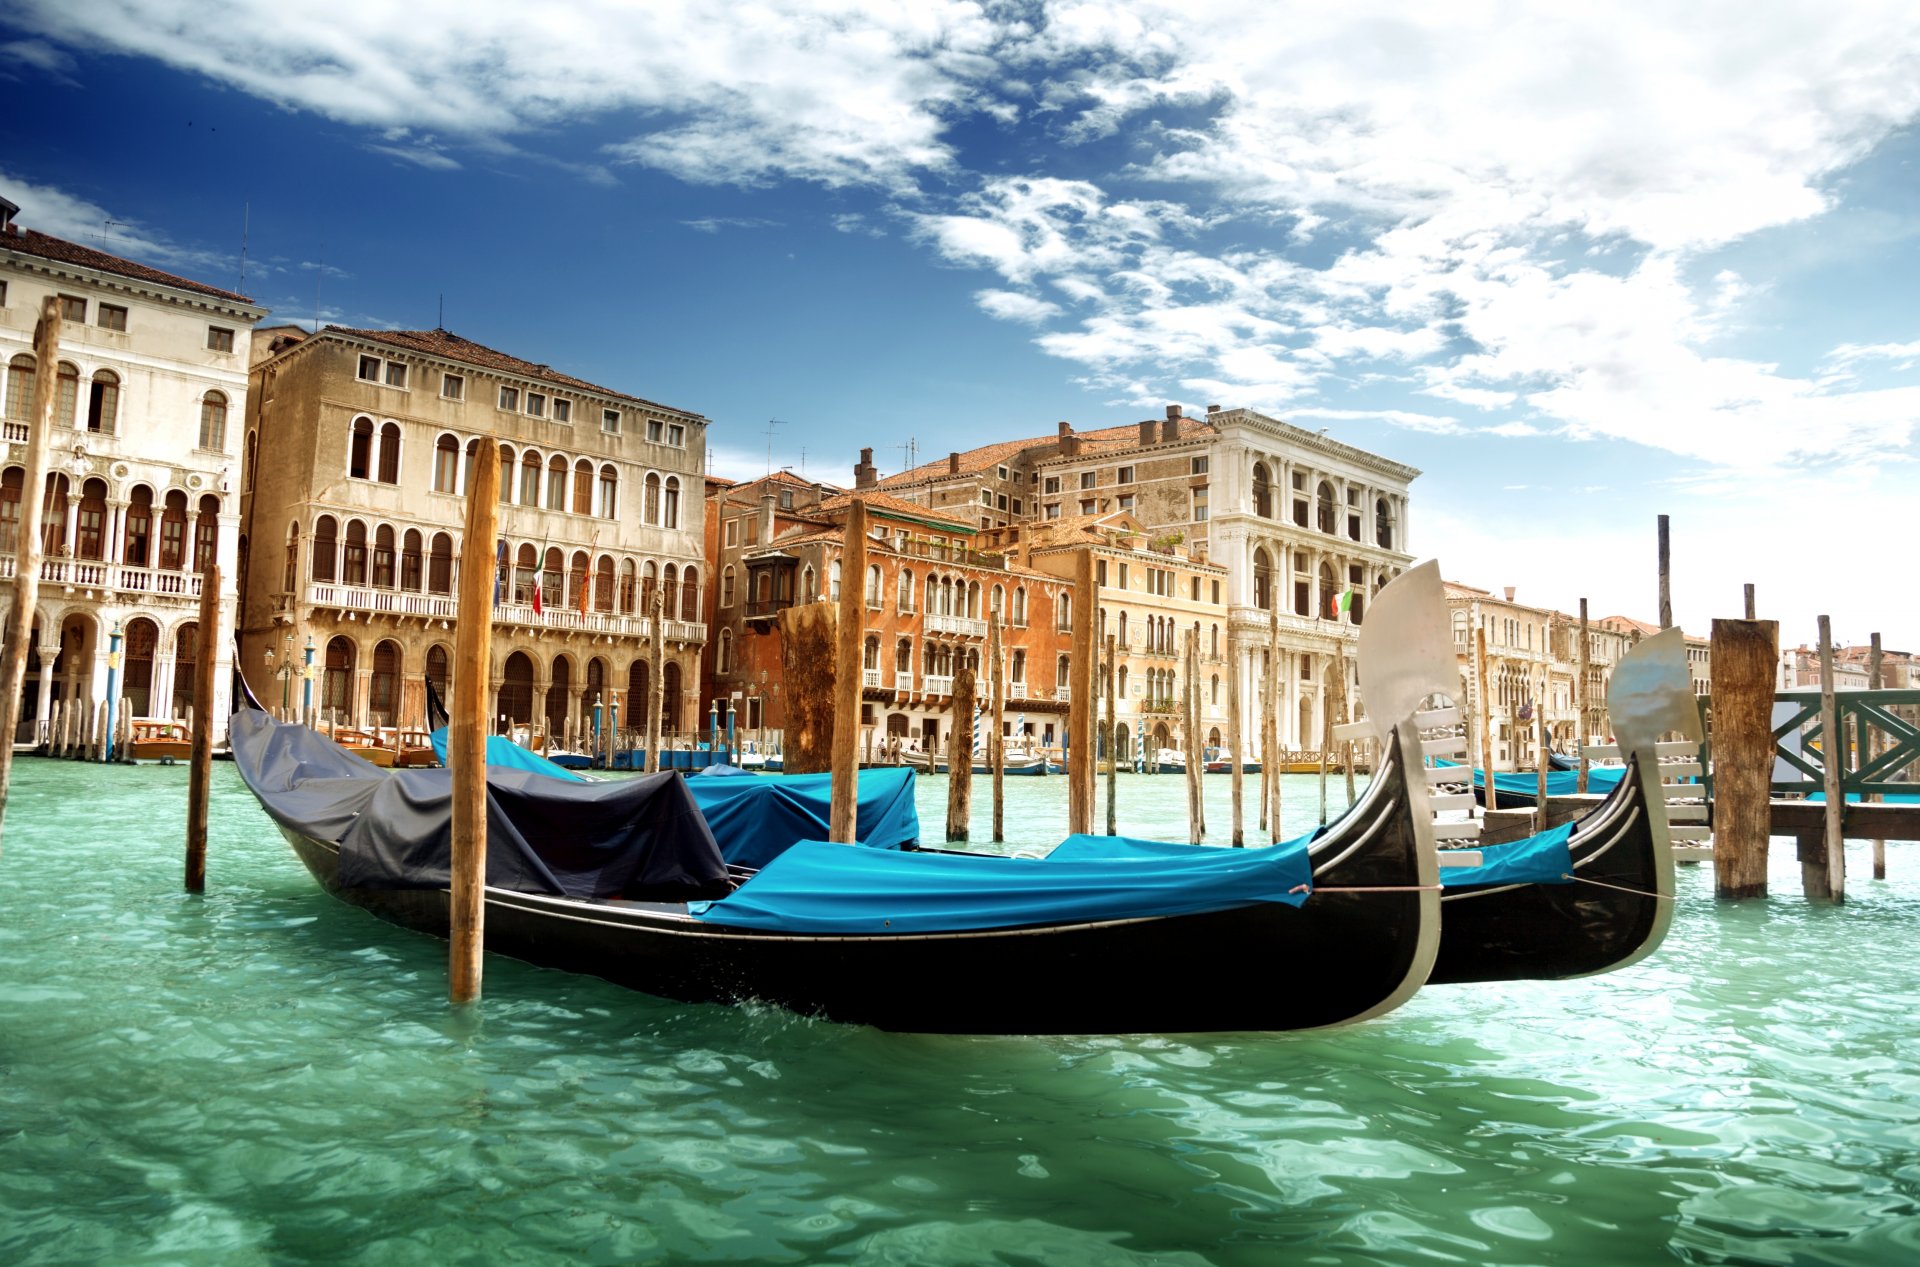 венеция canal grande италия гранд-канал гондолы вода зеленая море архитектура небо облака